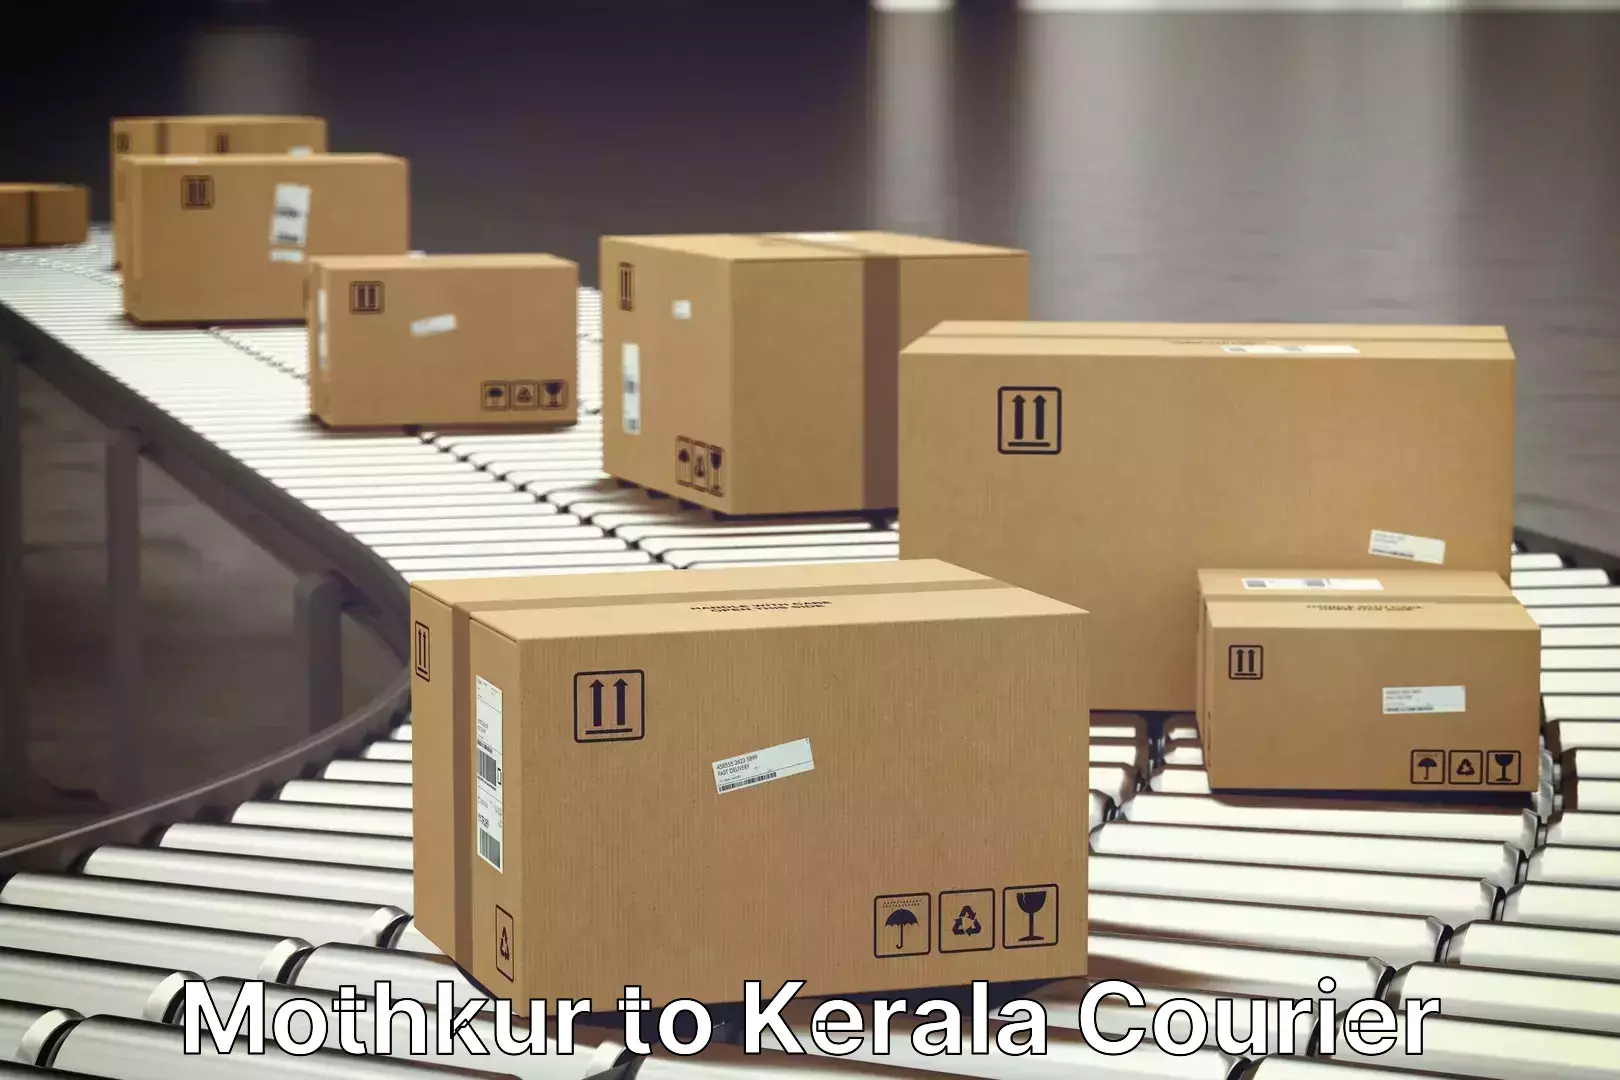 Trusted moving company Mothkur to Kerala